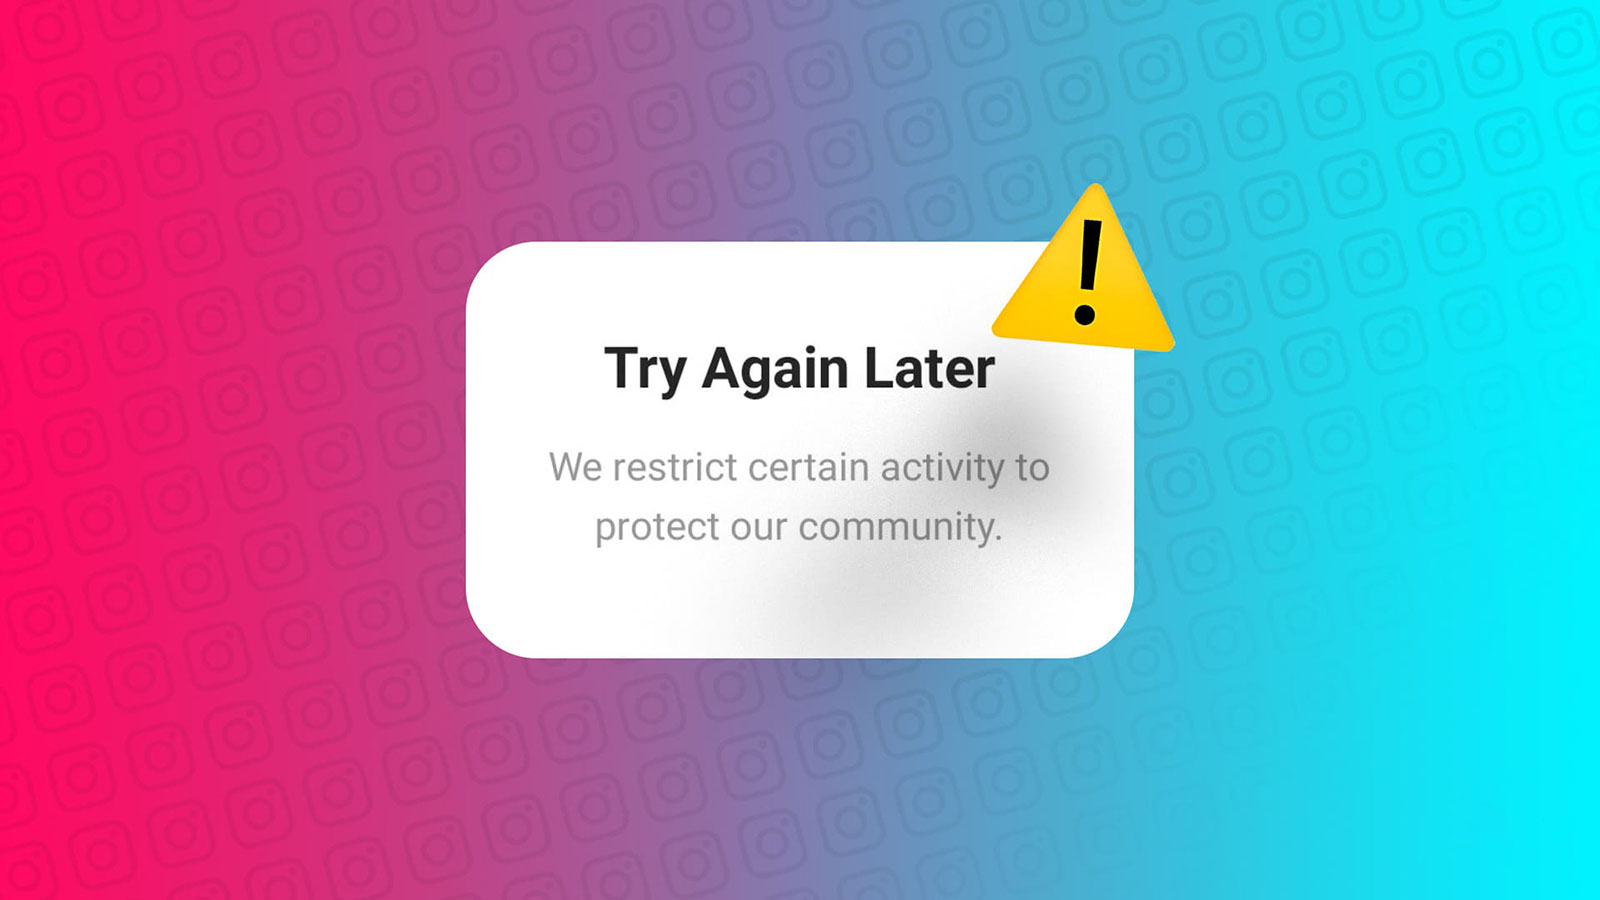 We restrict certain activity Instagram یعنی چی؟ چگونه این خطا را رفع کنیم